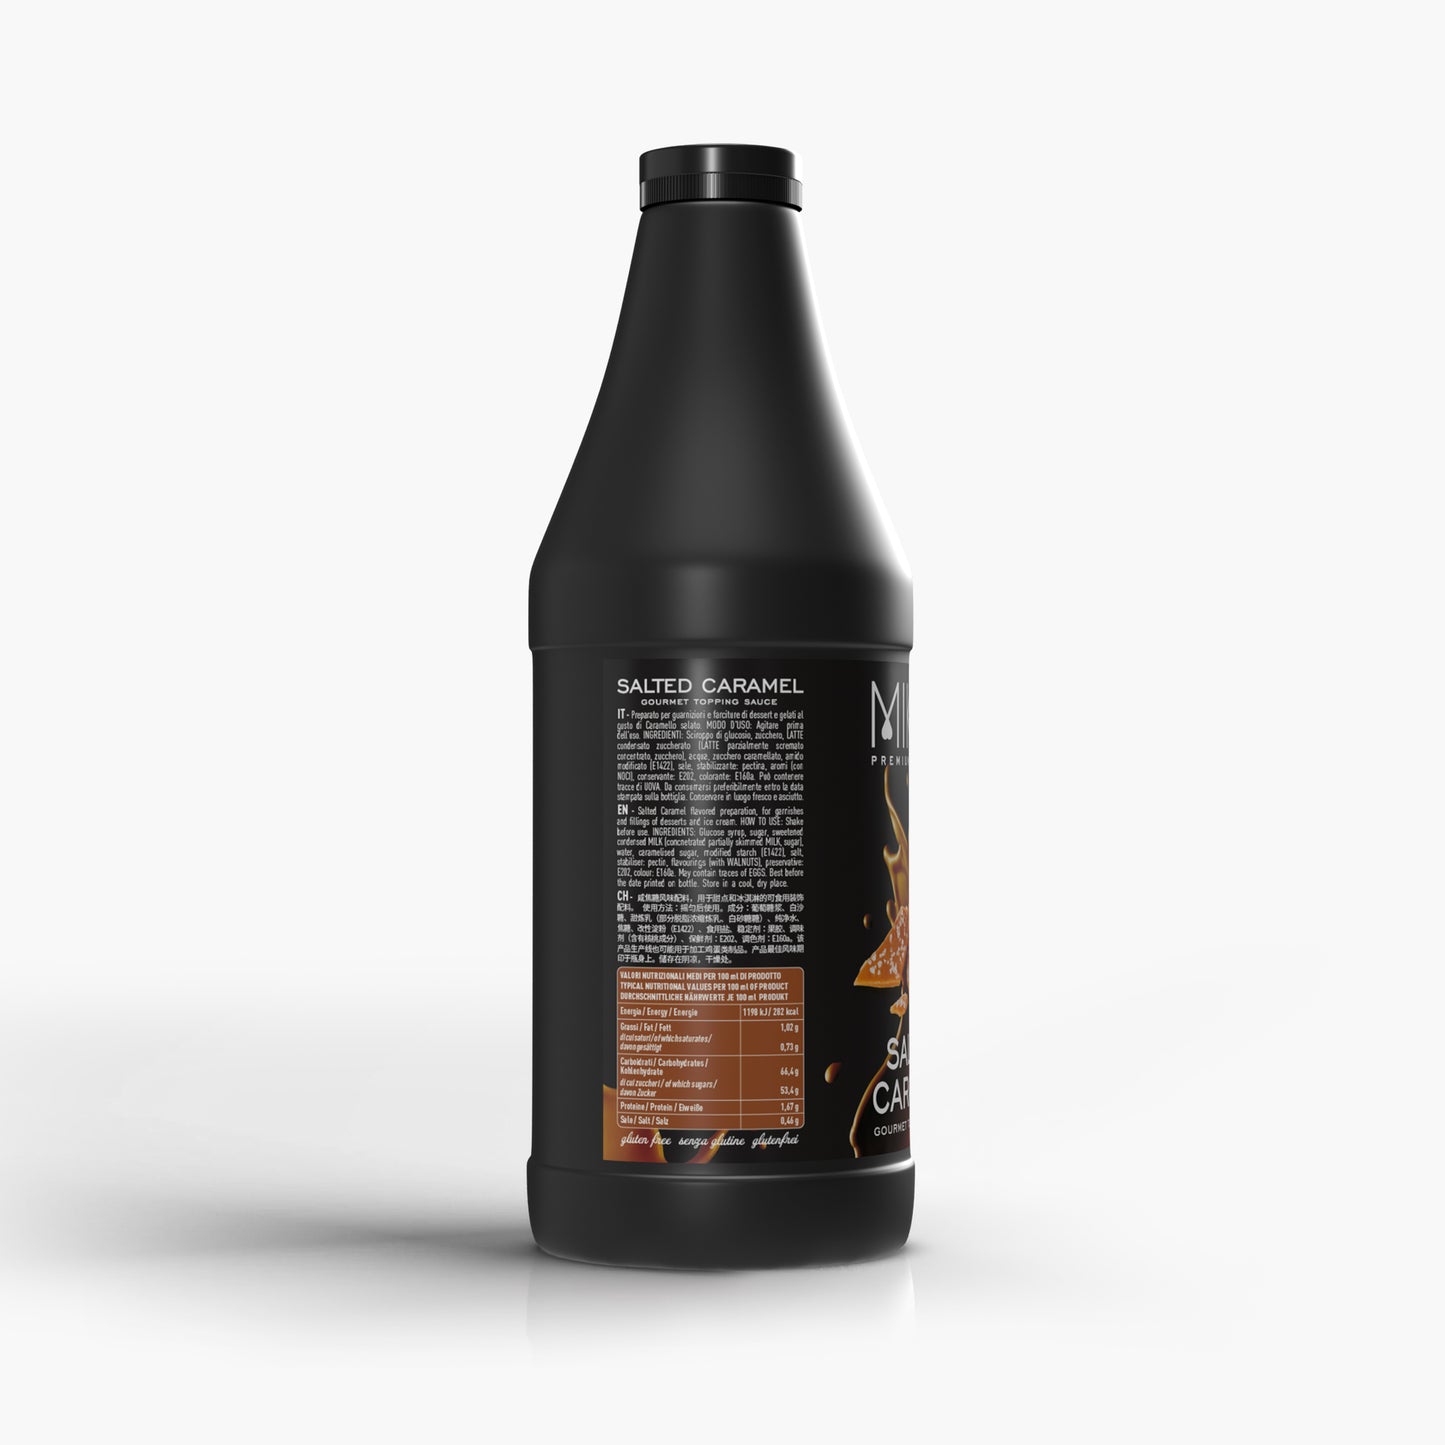 
                  
                    Mikah Premium Topping - Salted Caramel - 2,5 Kg Topping Sauce
                  
                